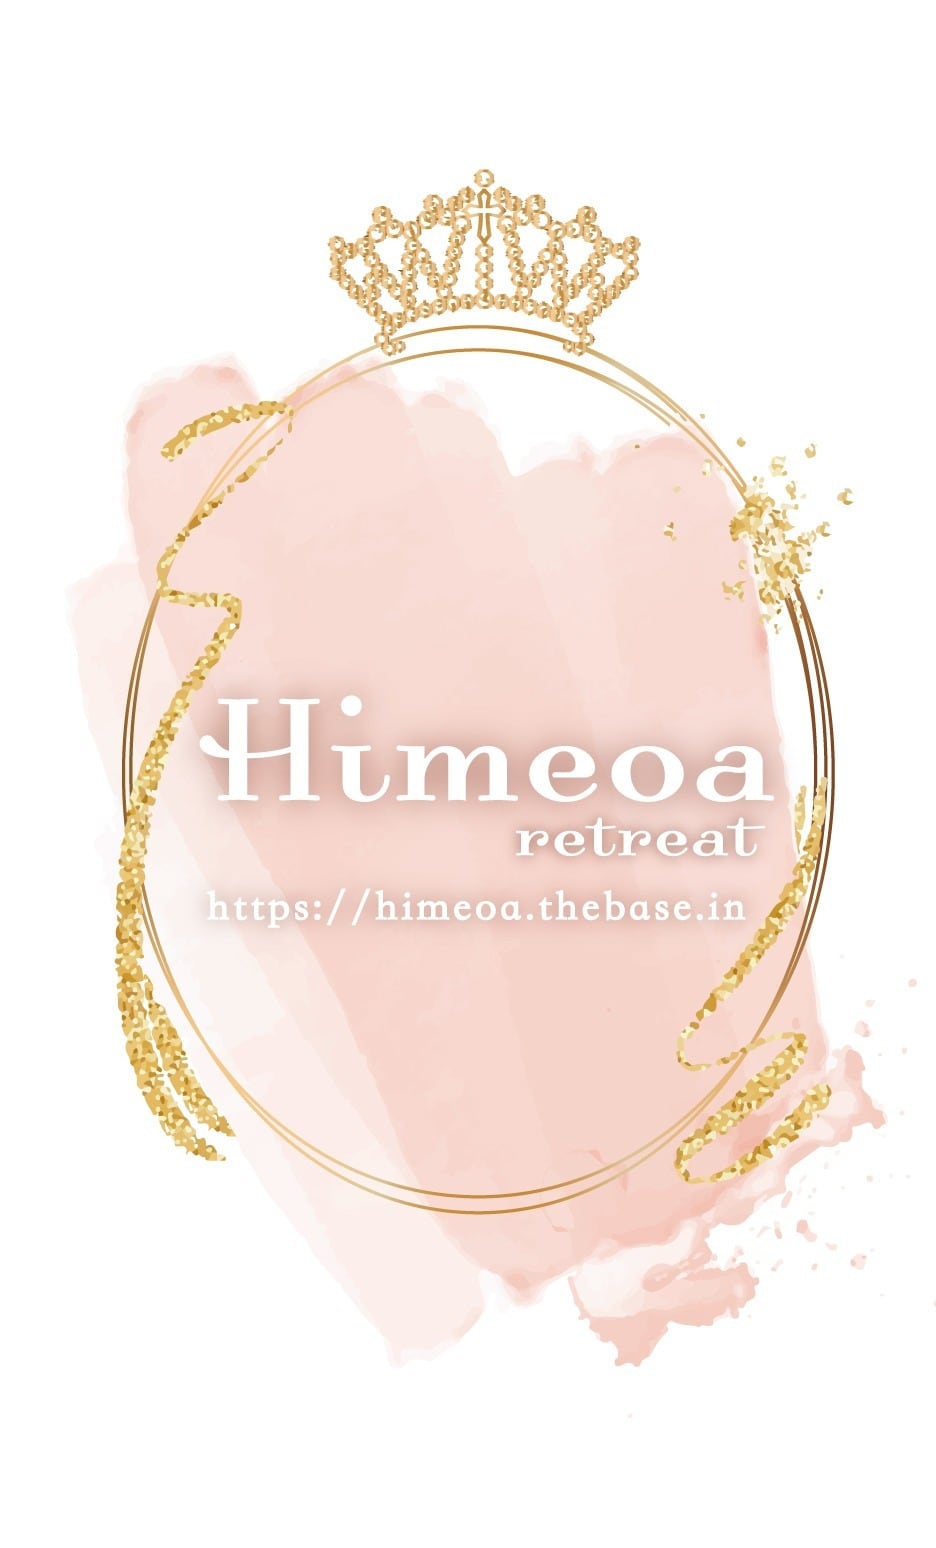 Himeoa retreat